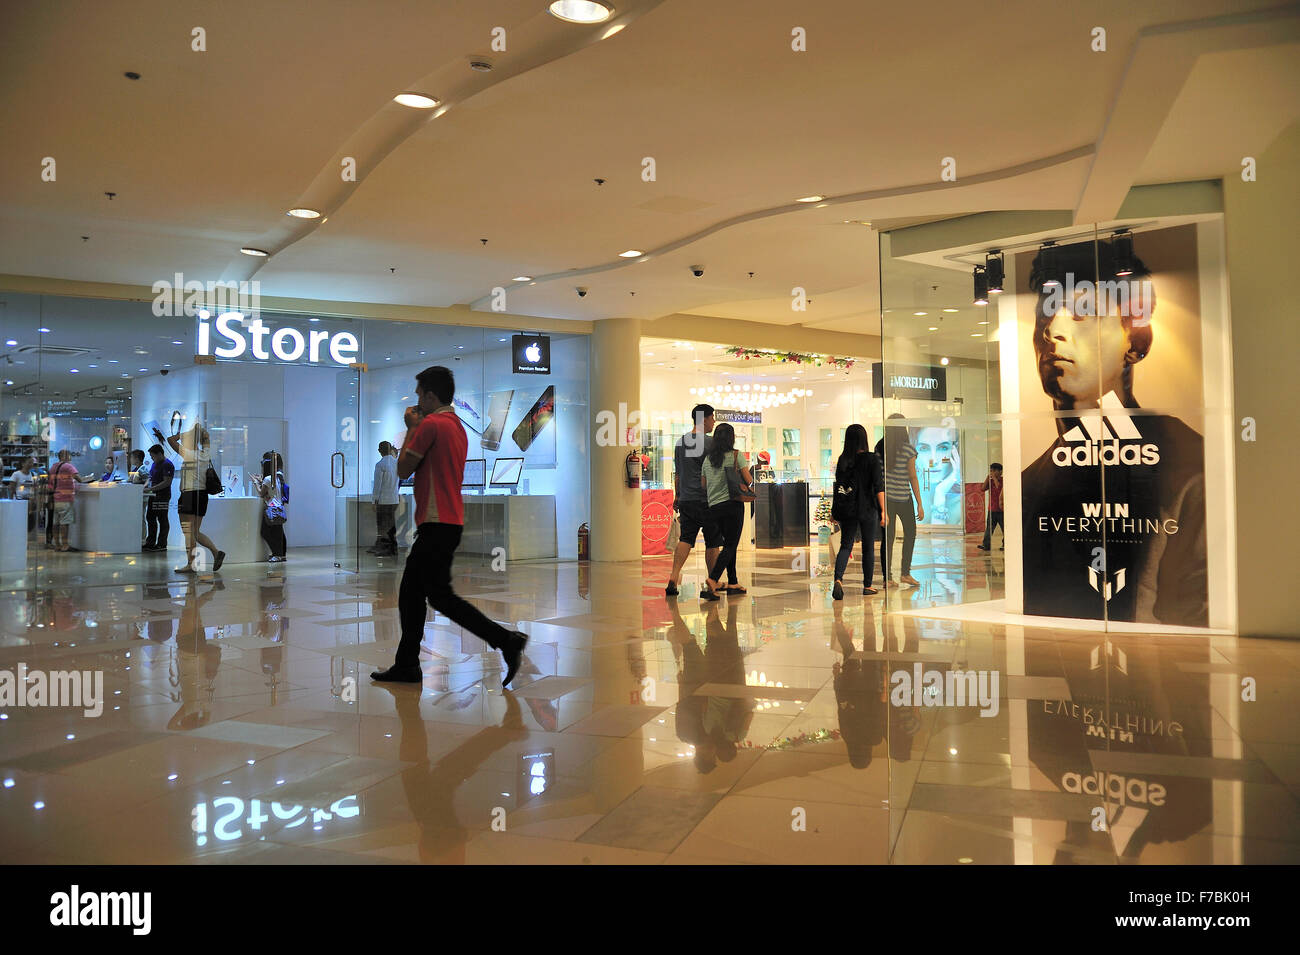 Ayala Center Cebu with iStore and Adidas Shops Philippines Stock Photo -  Alamy